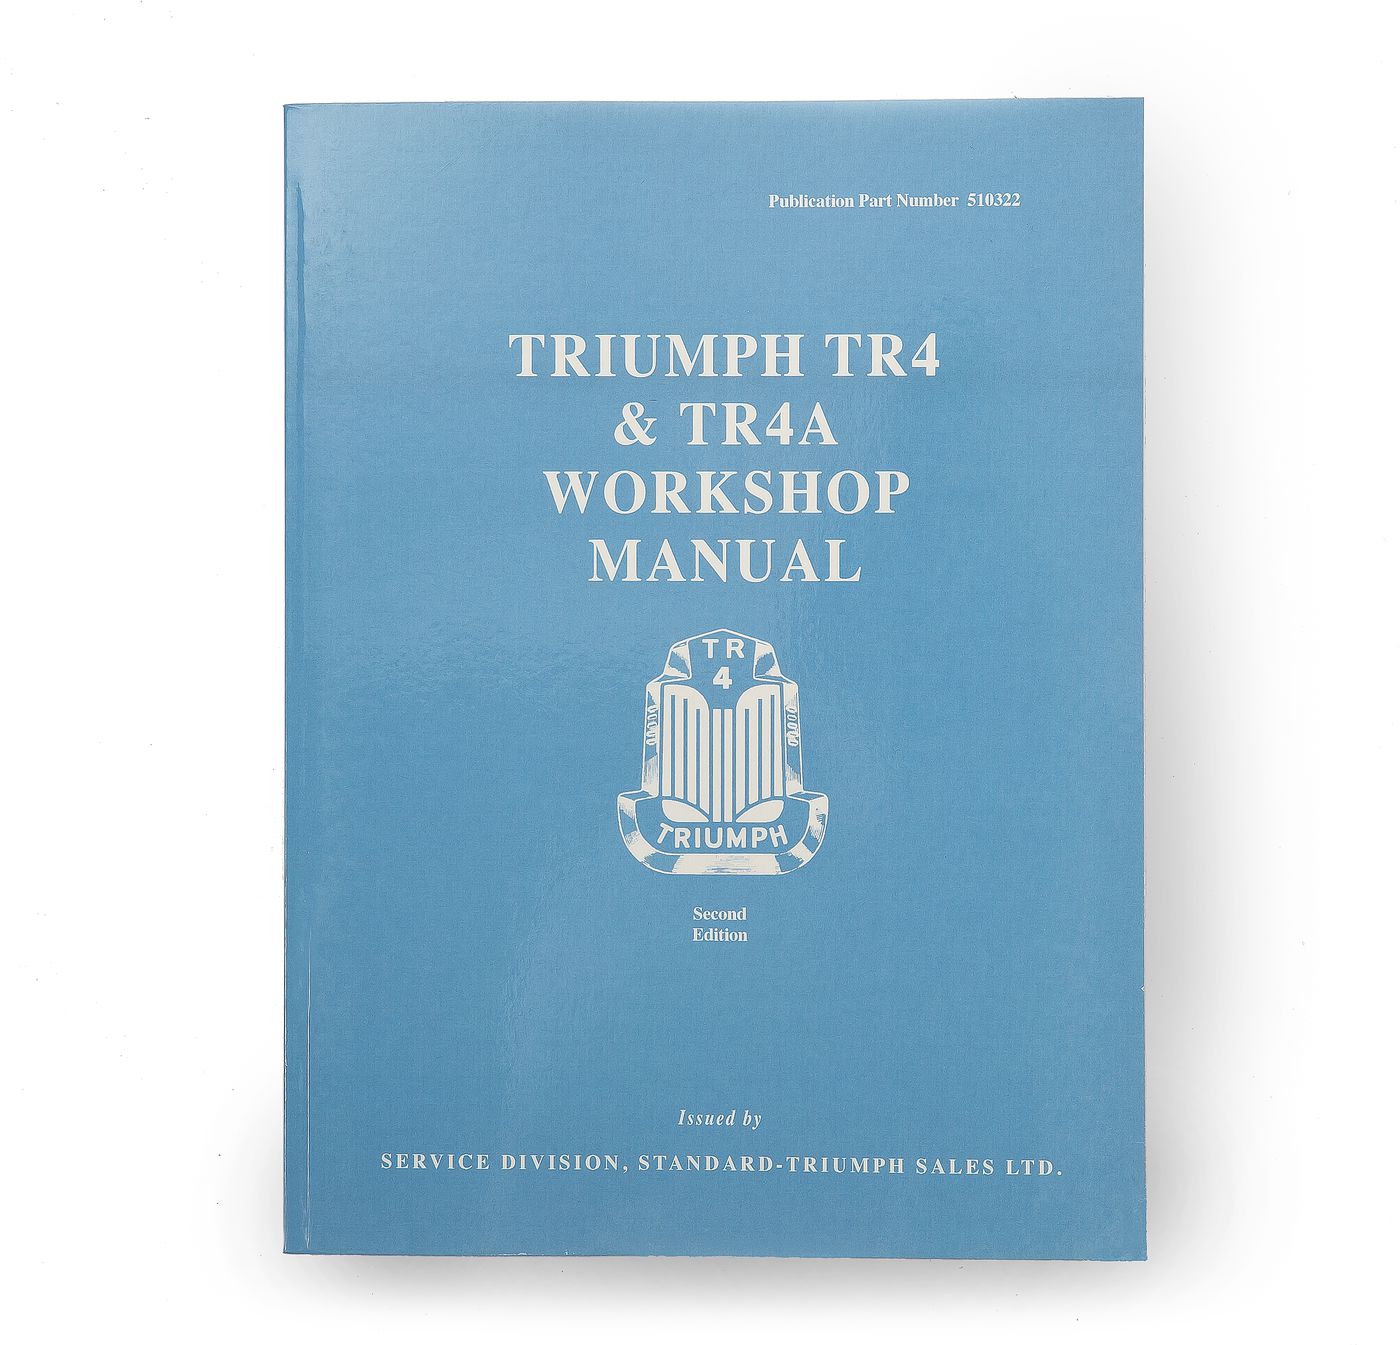 Triumph TR4 & TR4A Workshop Manual